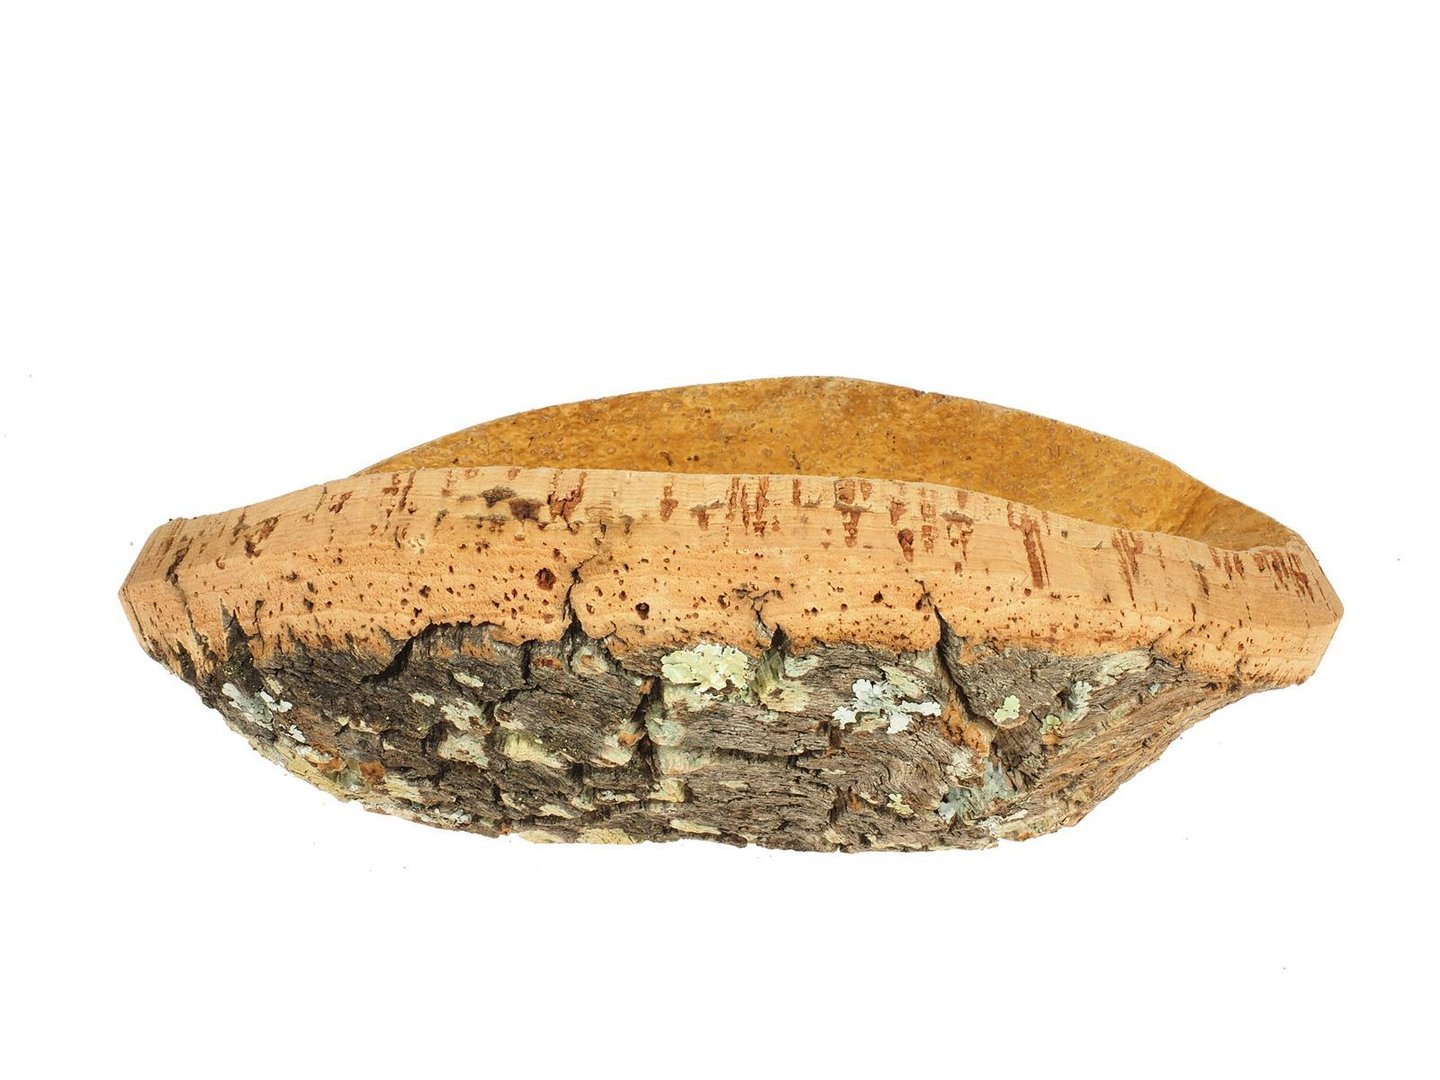 7321 10 4 Natural cork fruit bowl large cork